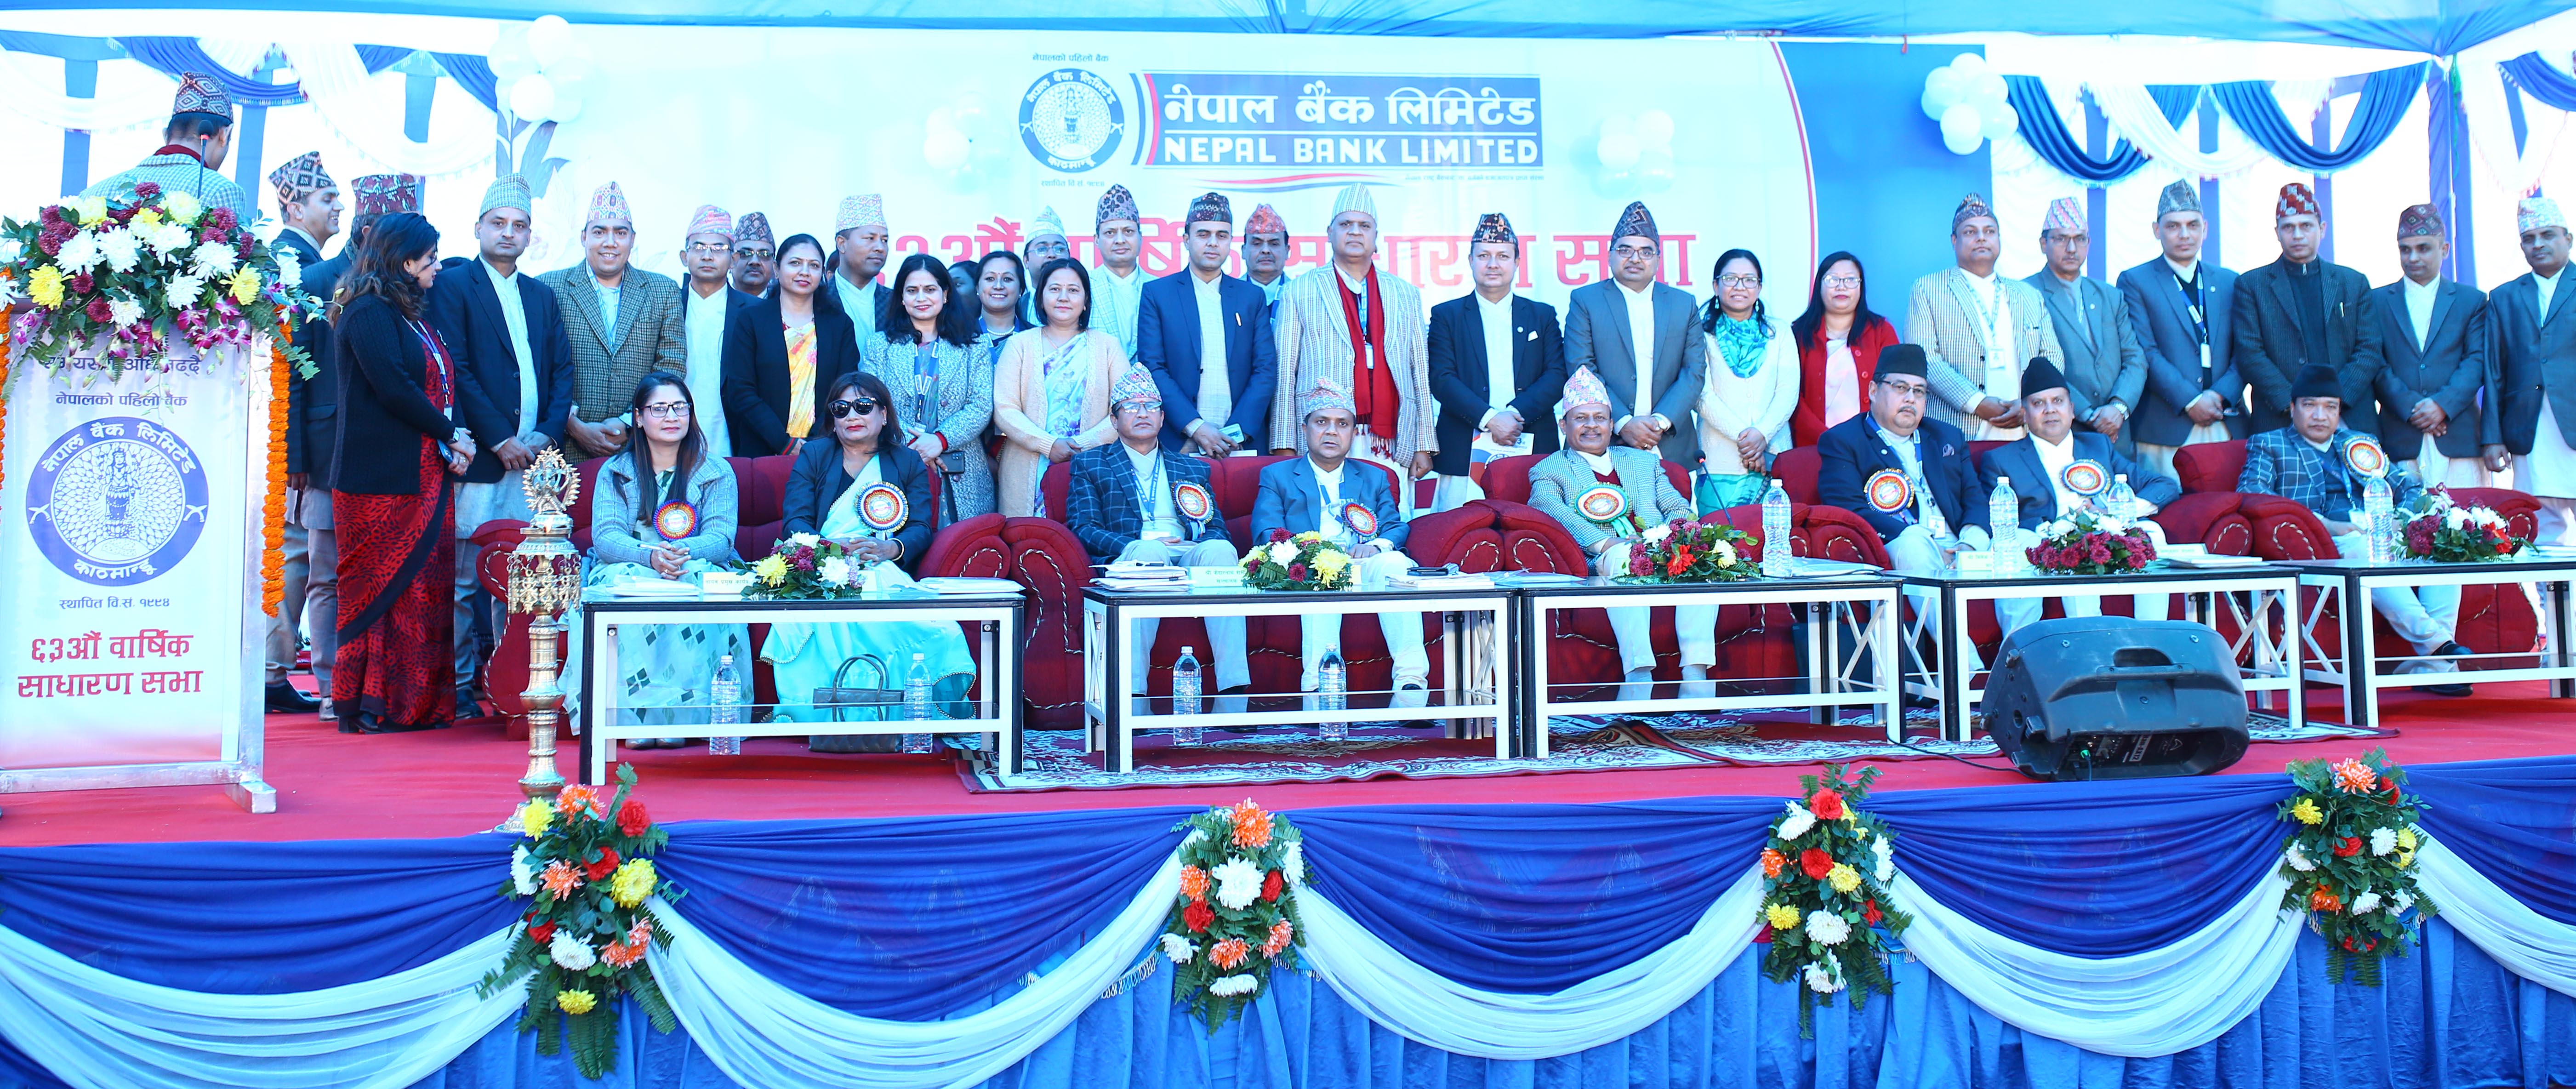 नेपाल बैंकद्वारा १२ प्रतिशत लाभांश पारित